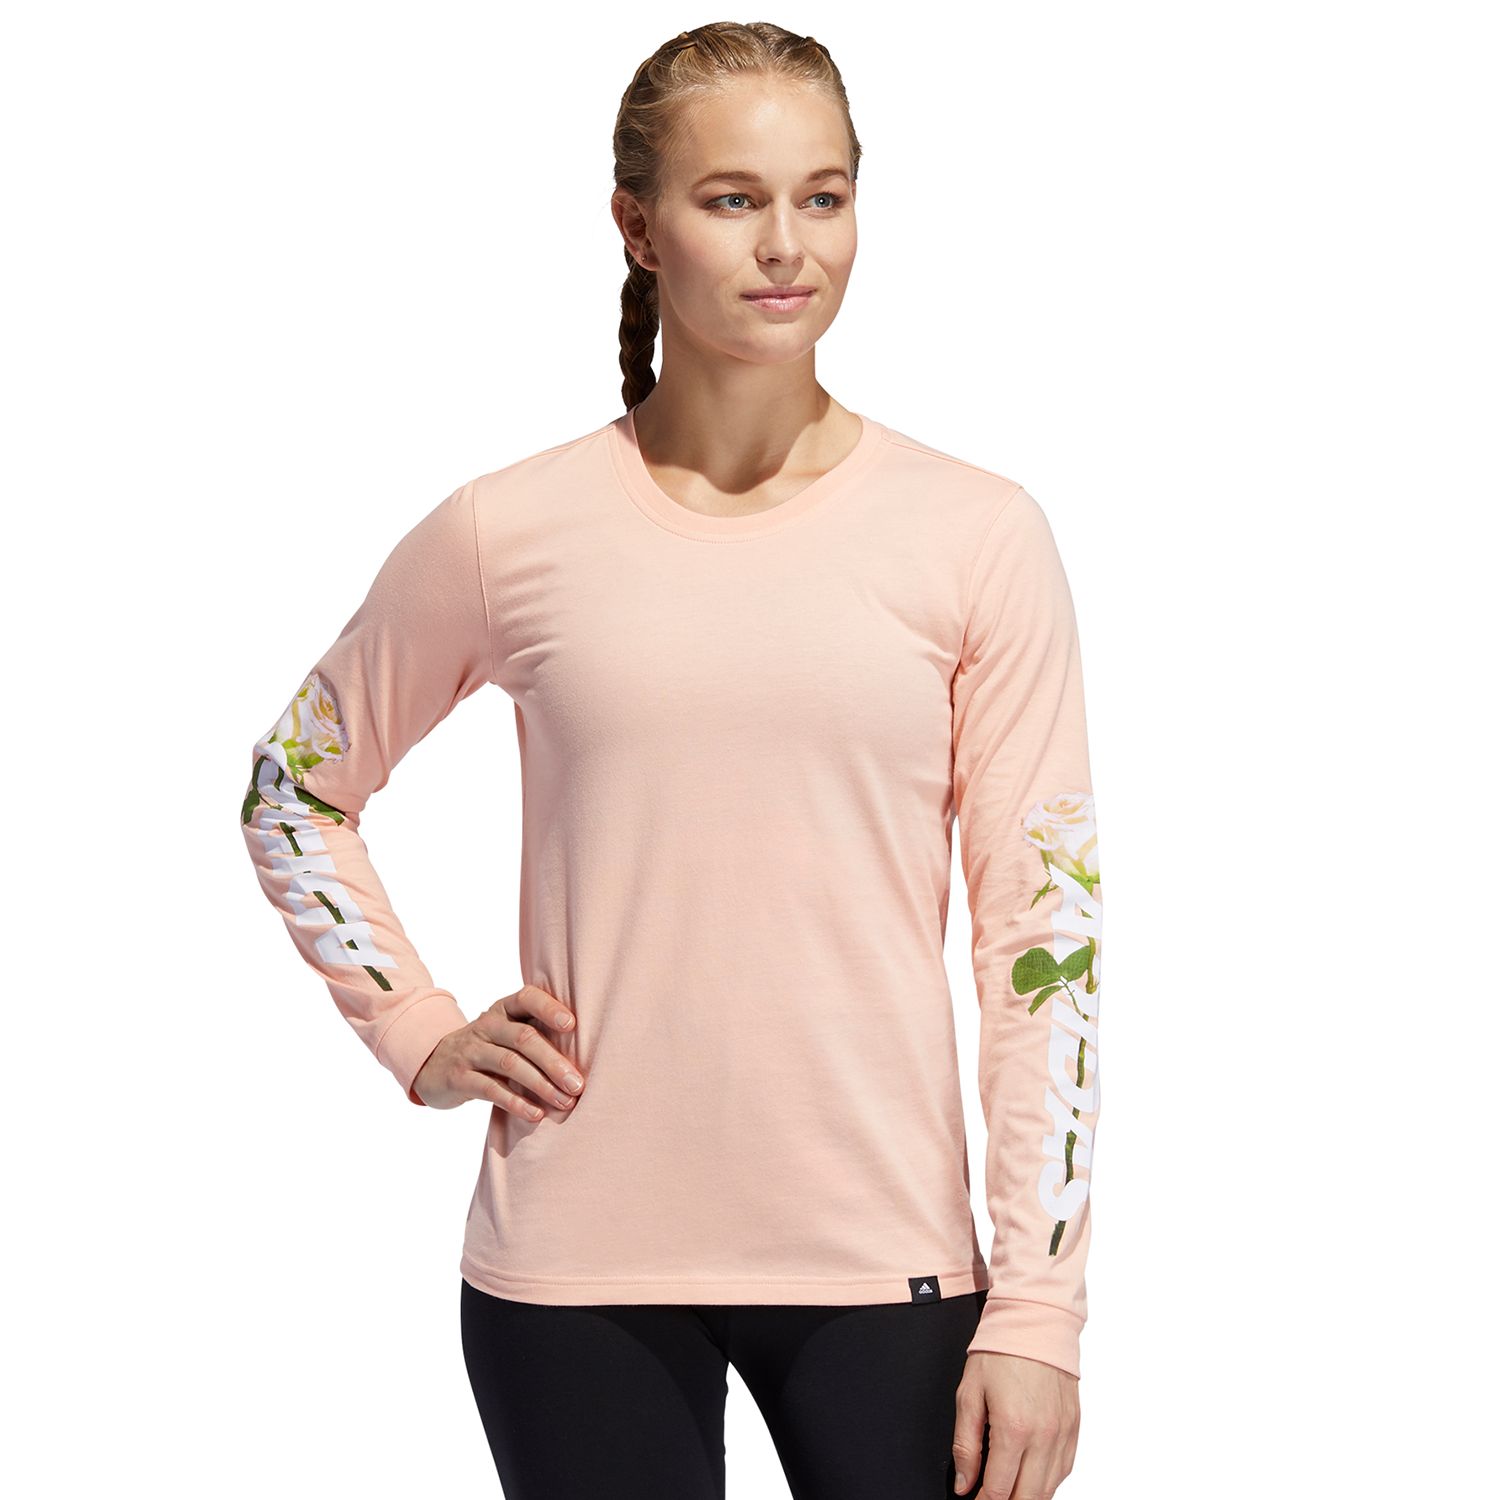 floral adidas shirt